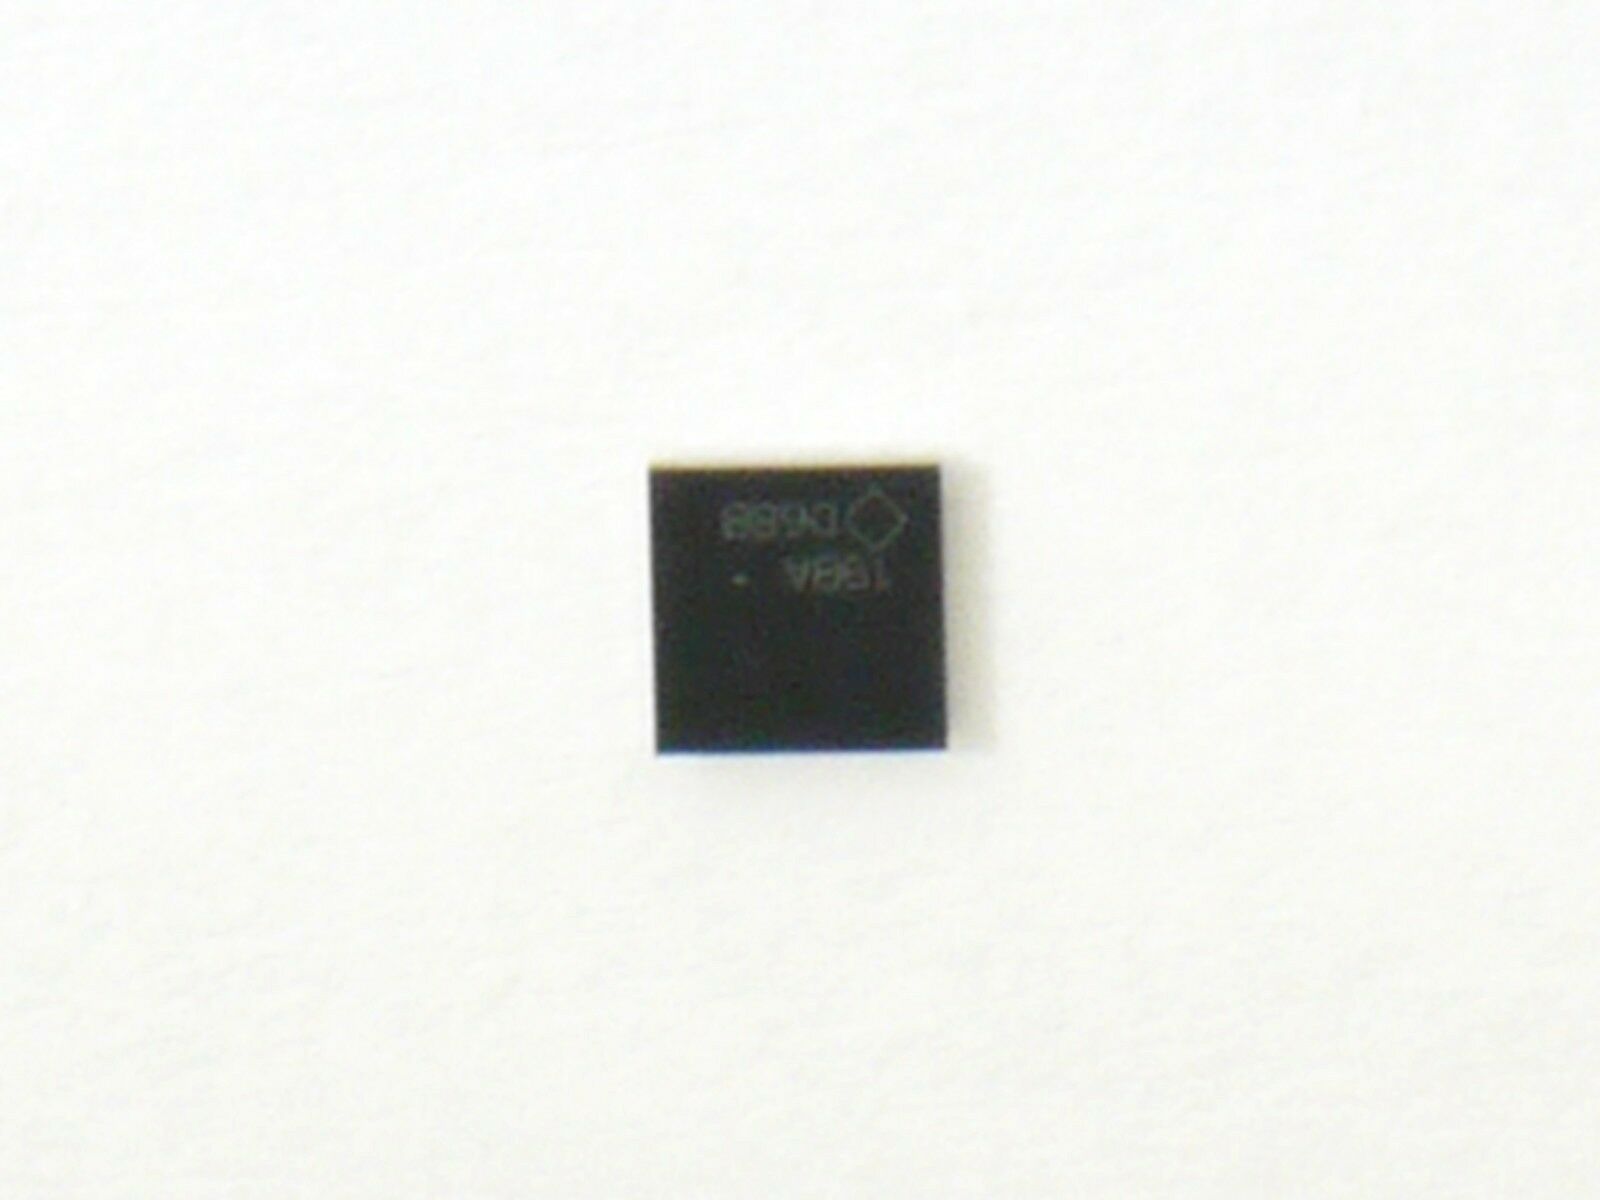 5 Pcs New Lp8550tlx Bga Power Ic Chipset Us Free Shipping